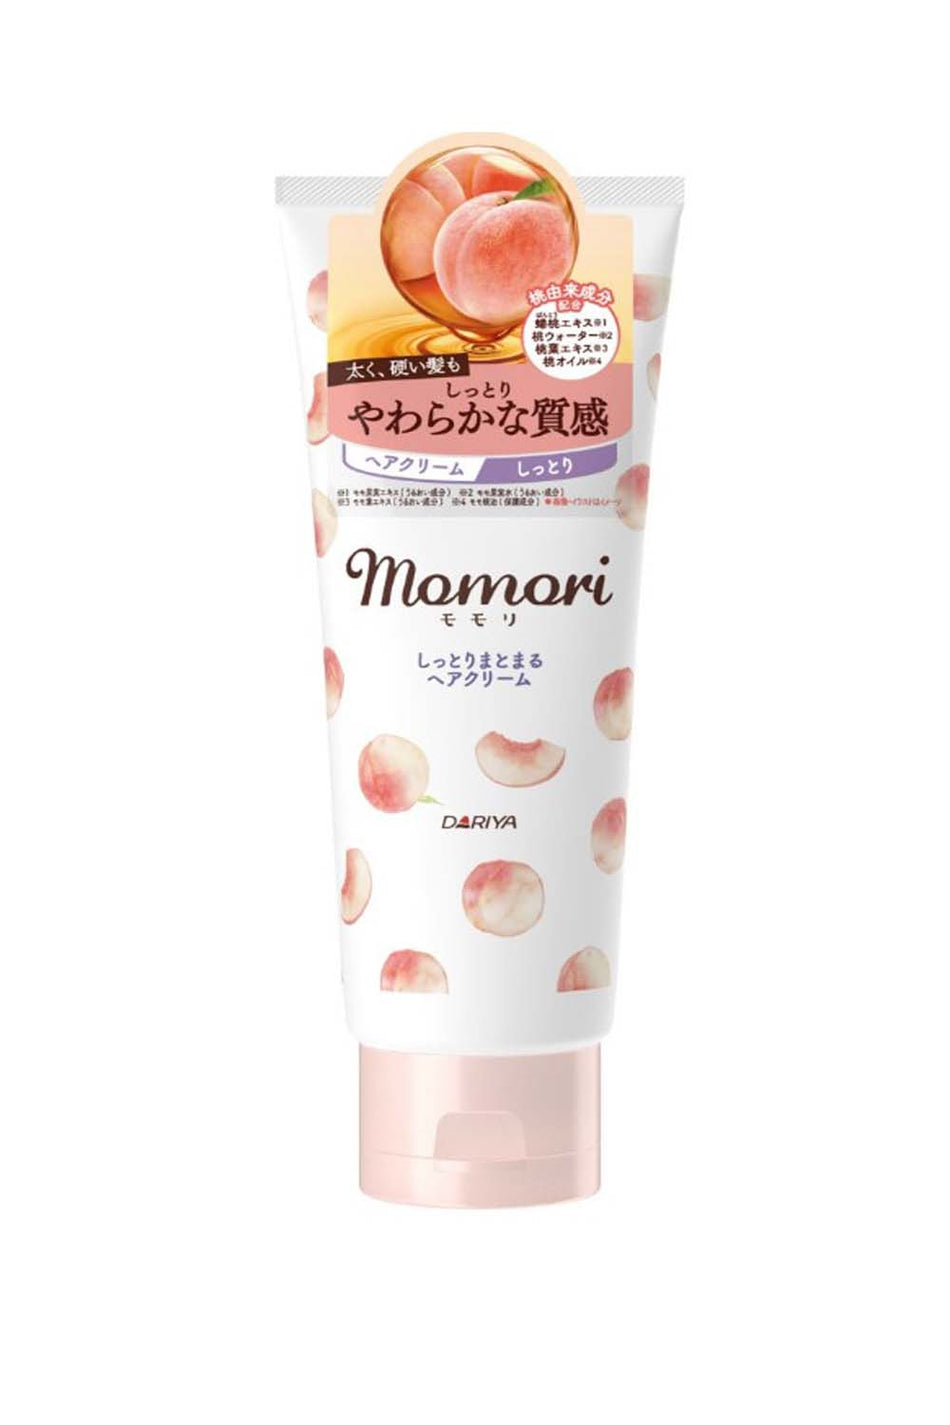 DARIYA  Momori Peach Moist & Cohesive Hair Cream